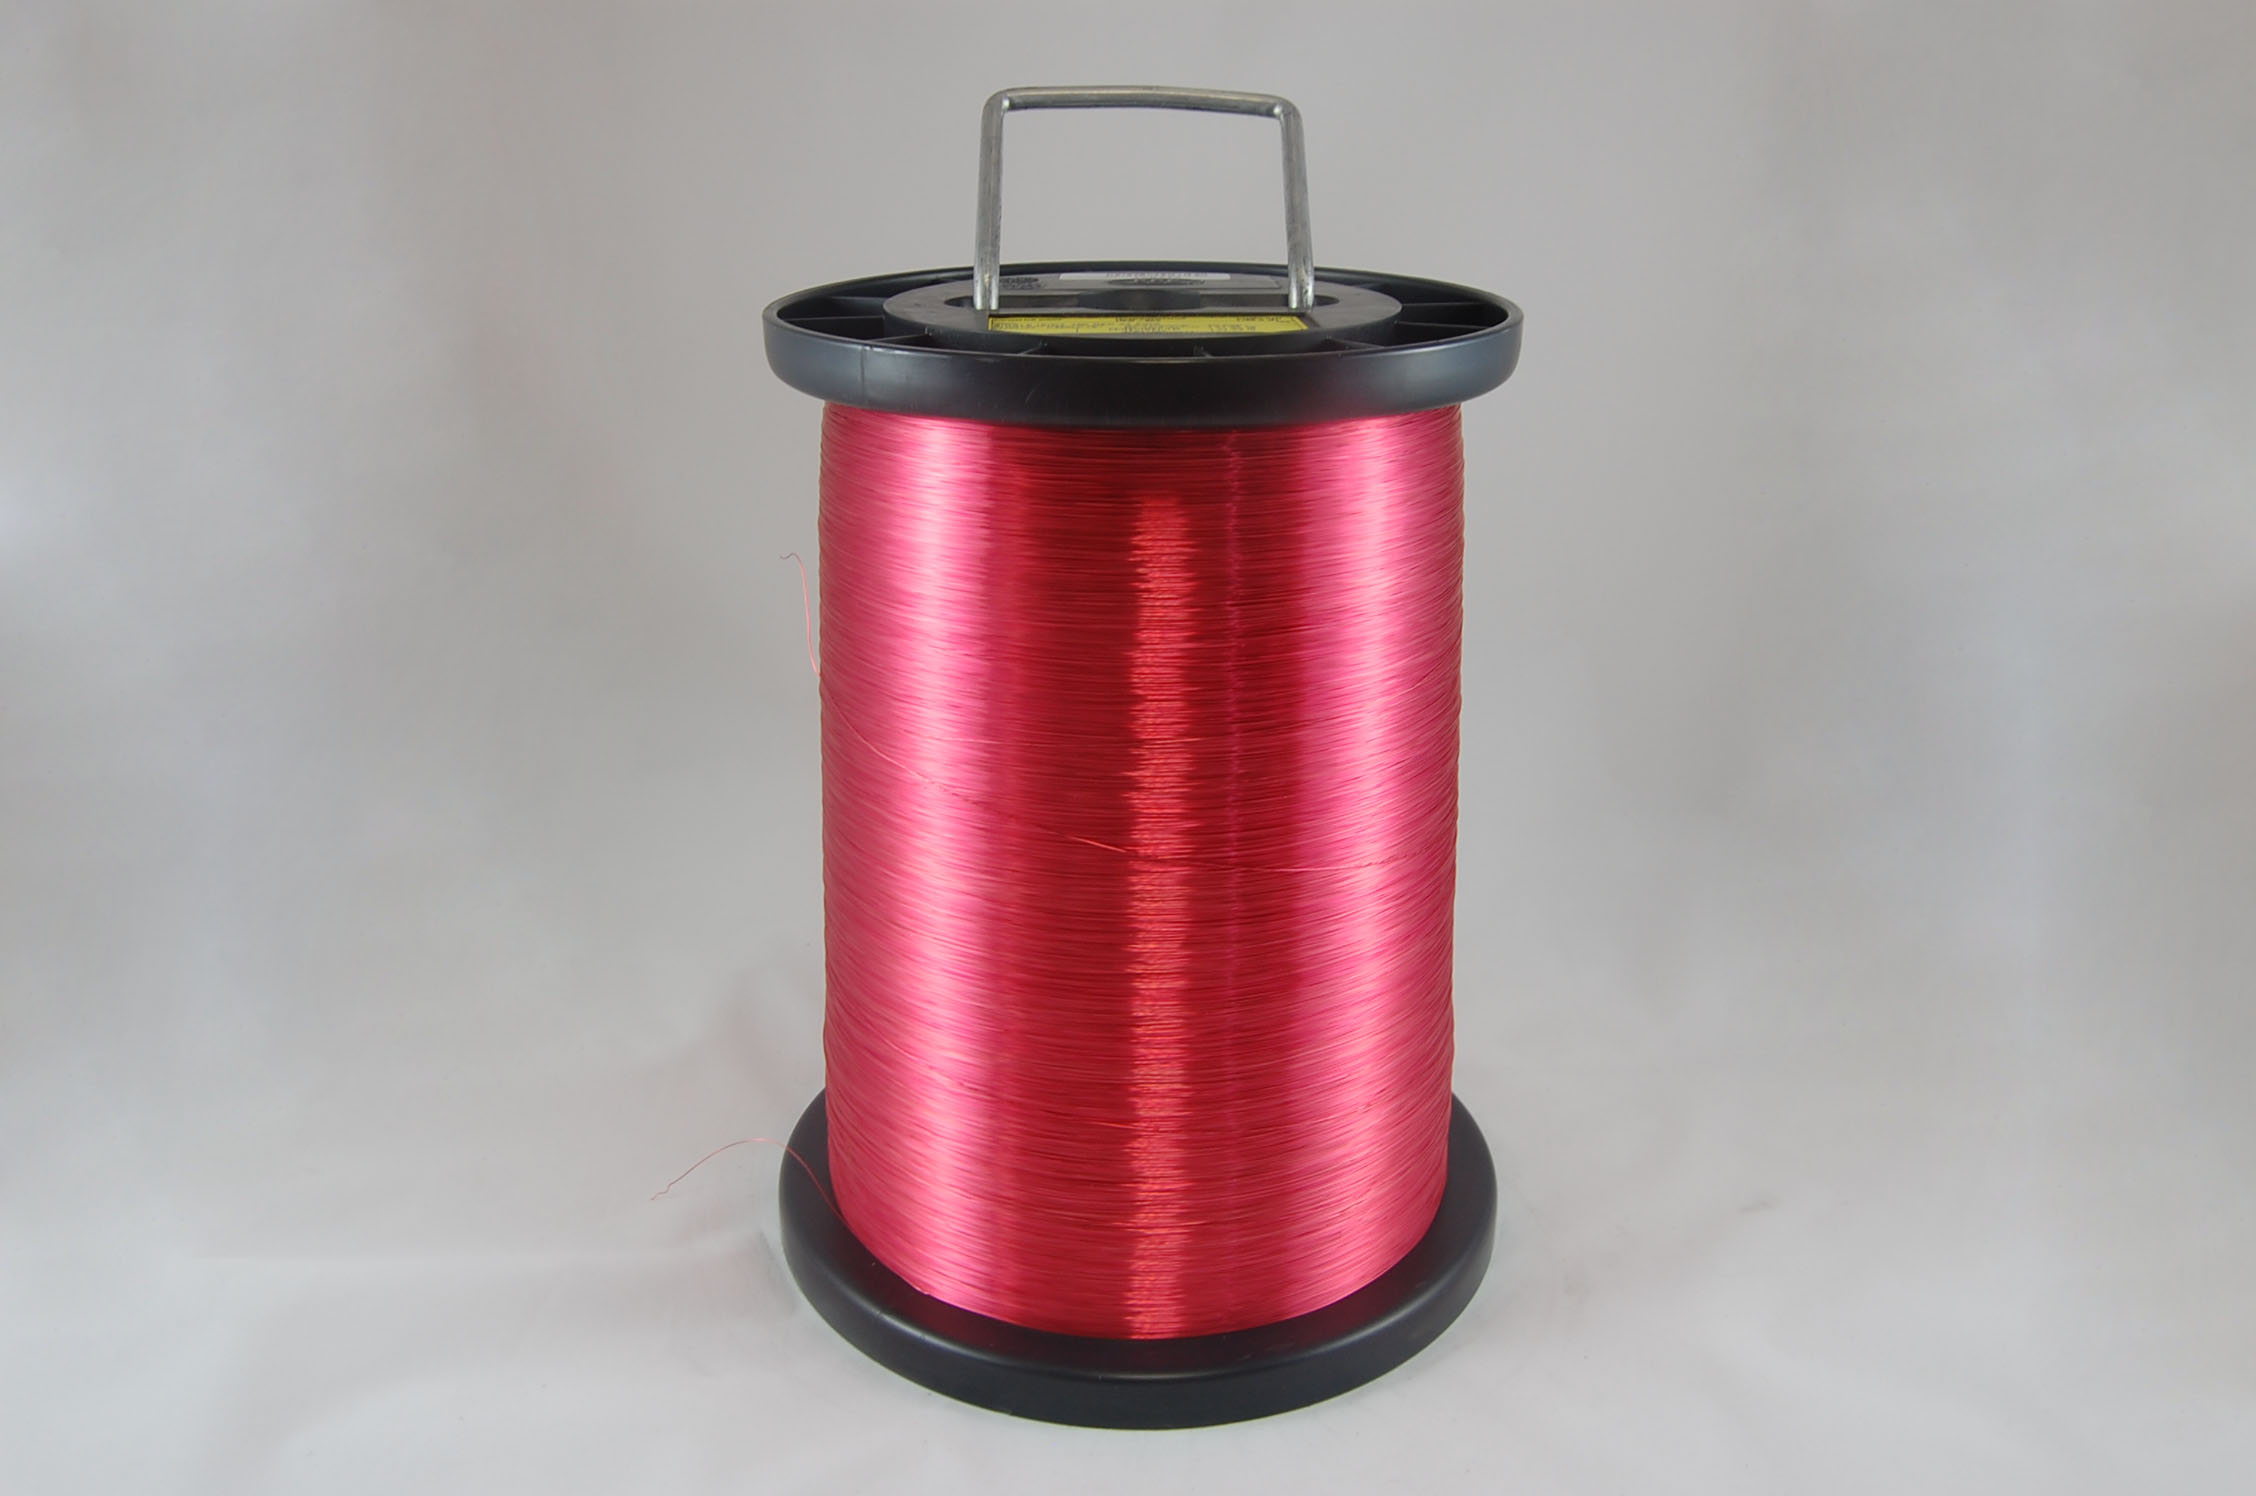 #22 Heavy INVEMID 200 Round MW 35 Copper Magnet Wire 200°C, copper, 45 LB half pack pail (average wght.)